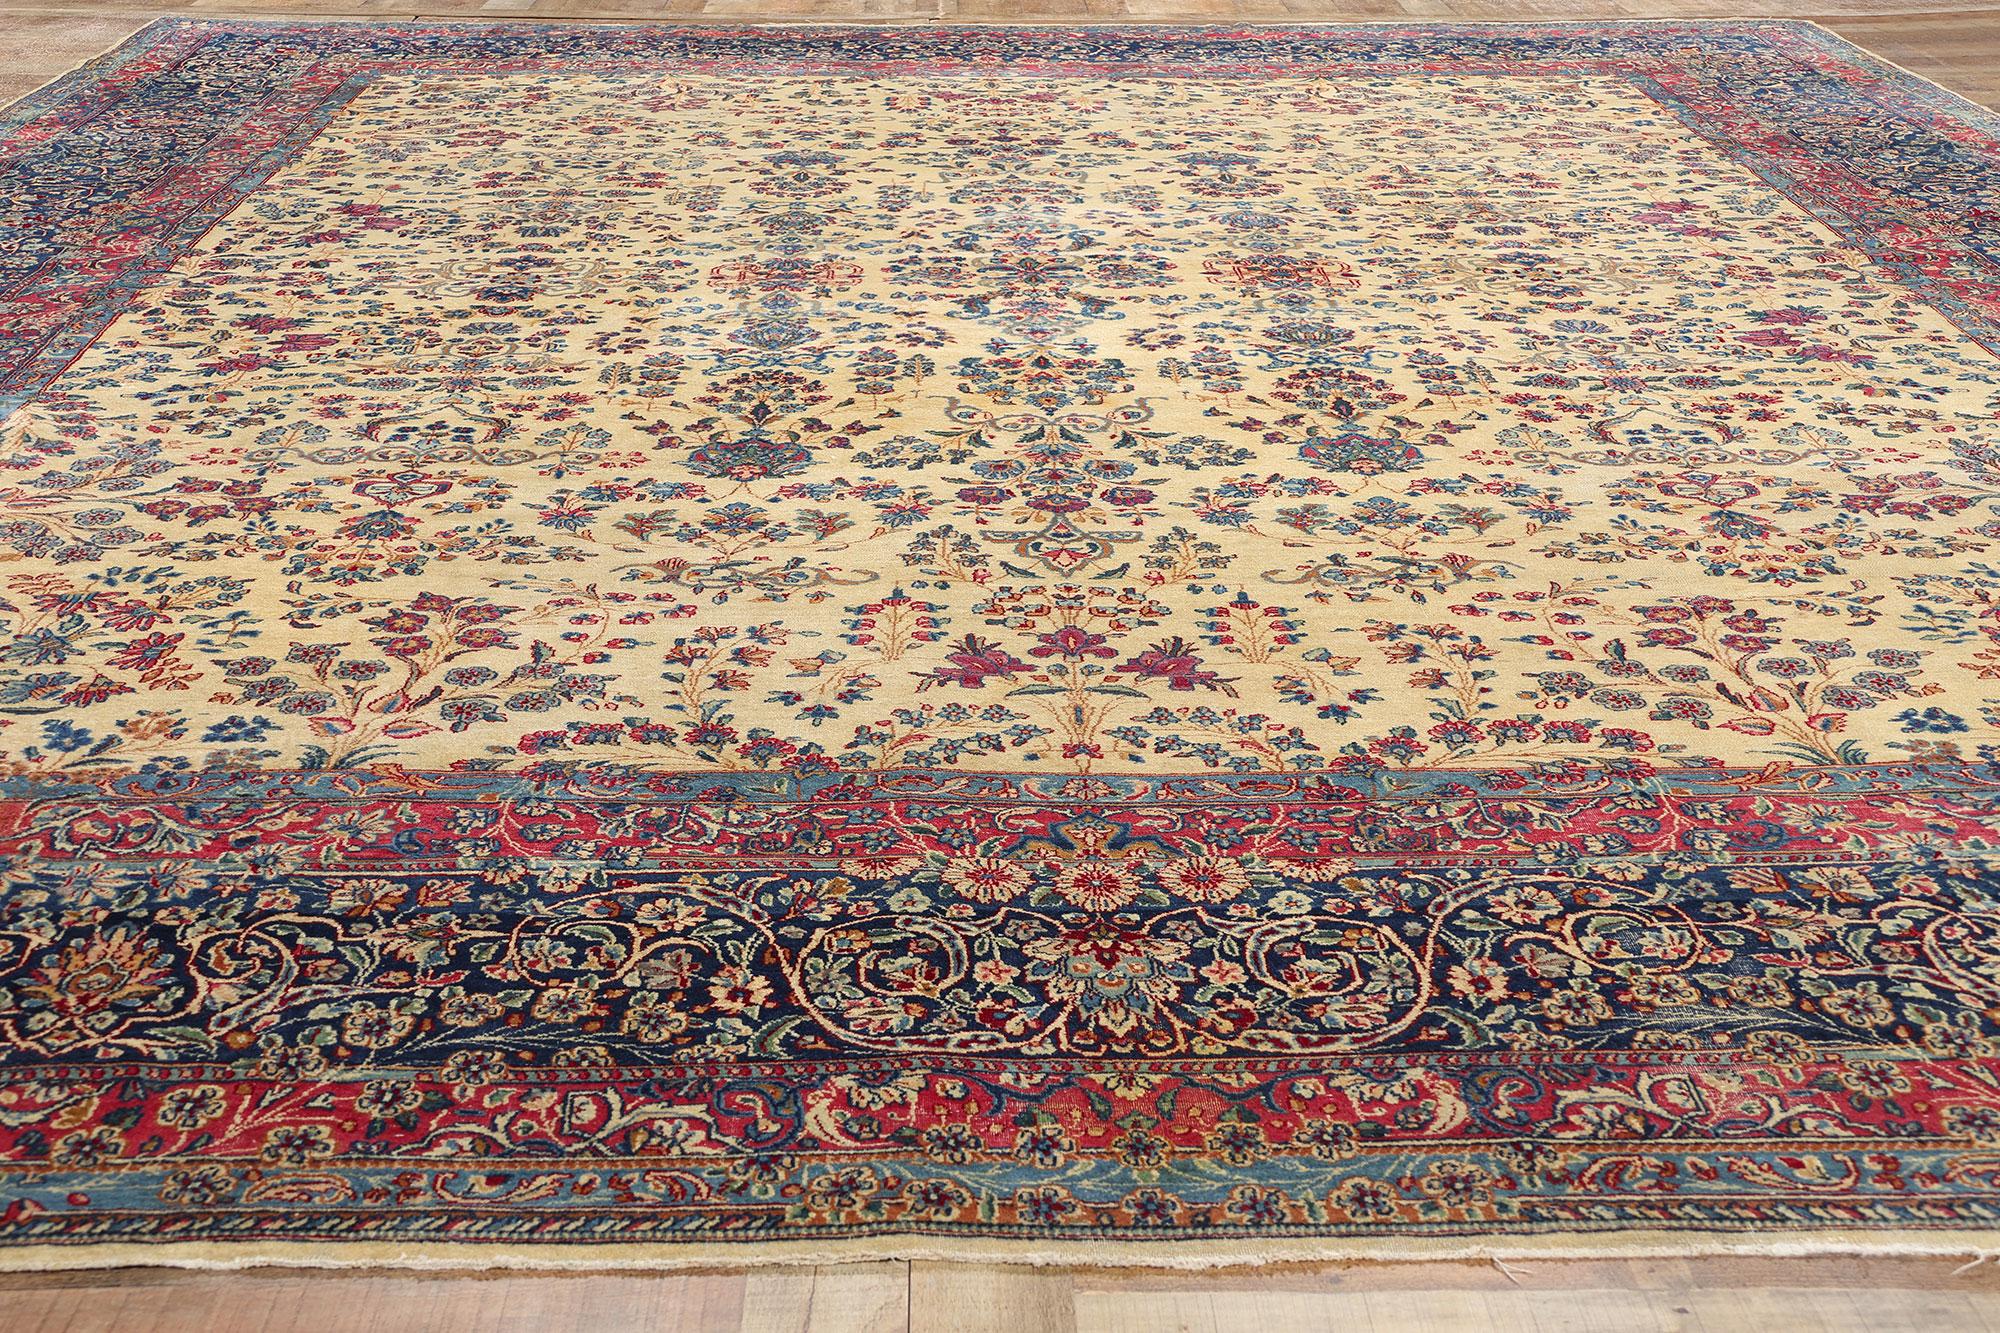 Wool Antique Persian Kerman Vase Carpet For Sale